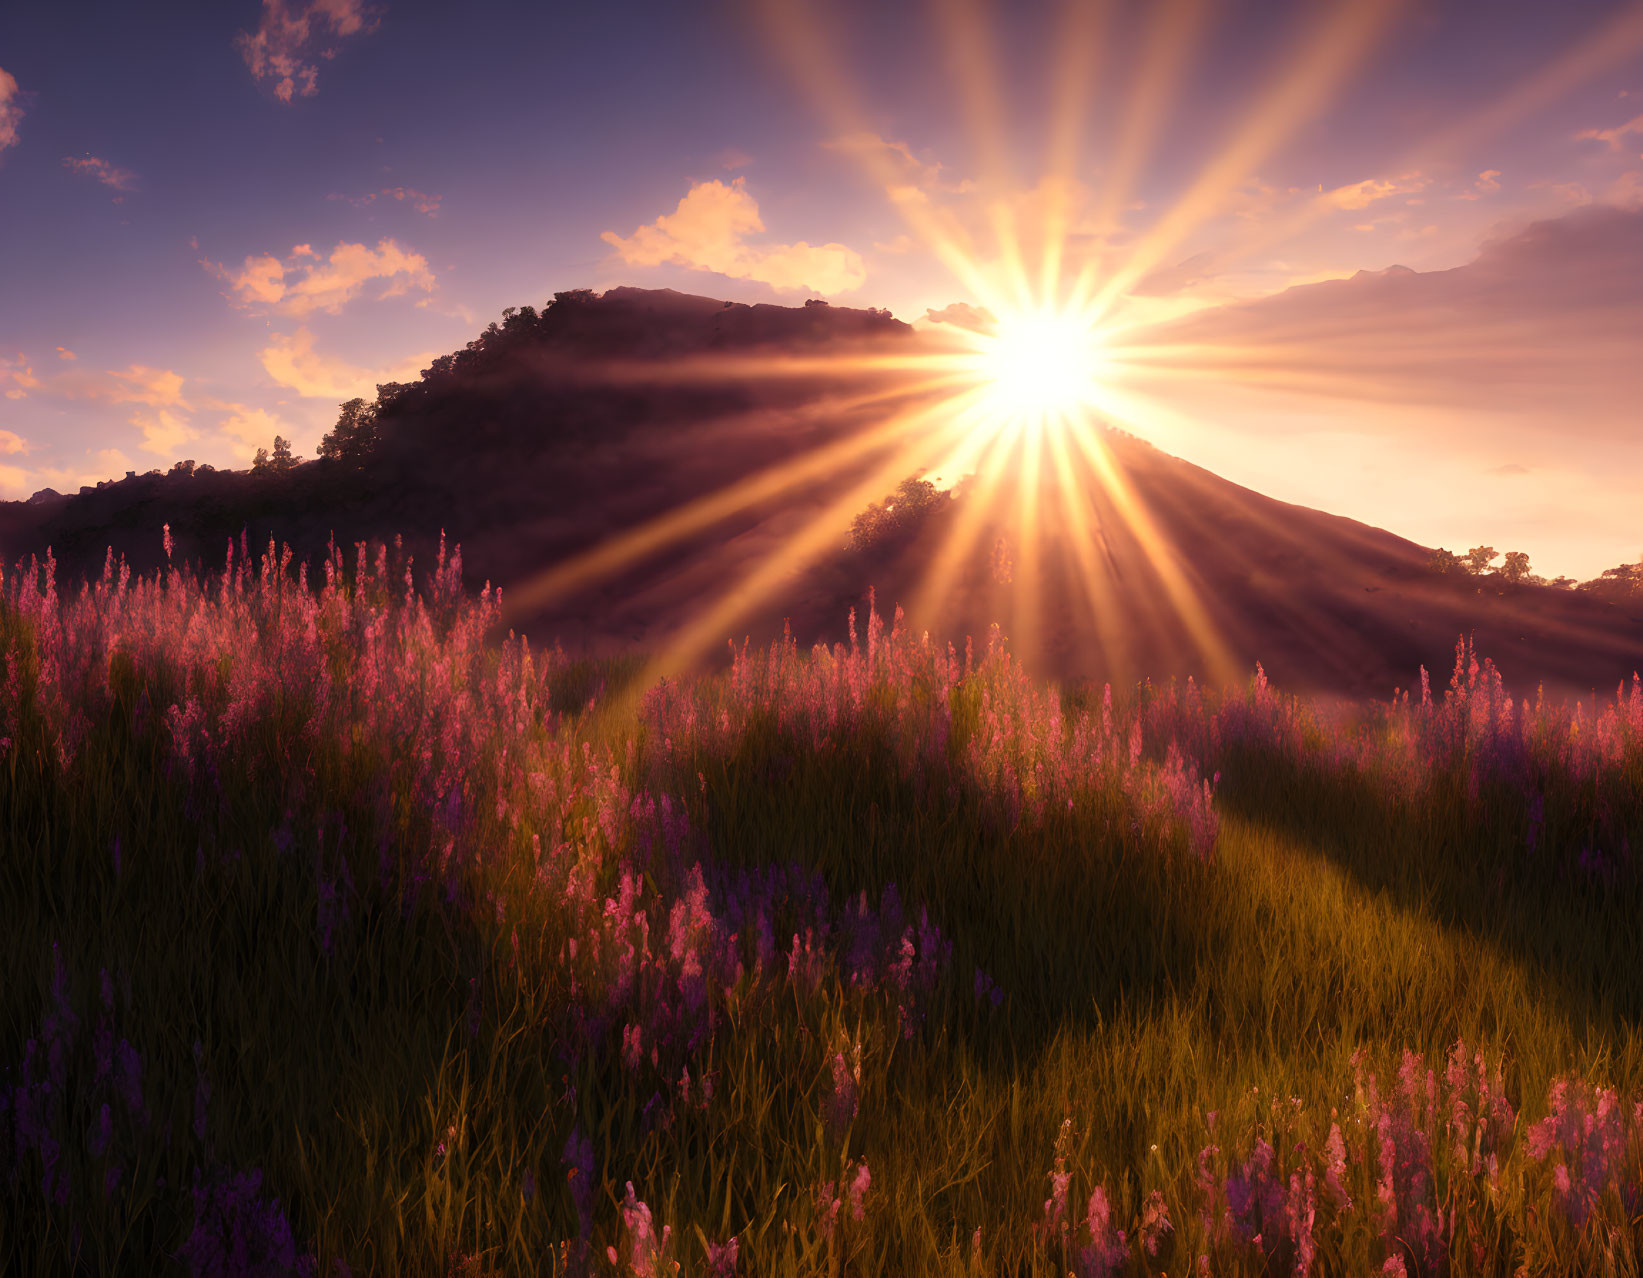 Vibrant sunset over mountain peaks and purple flowers